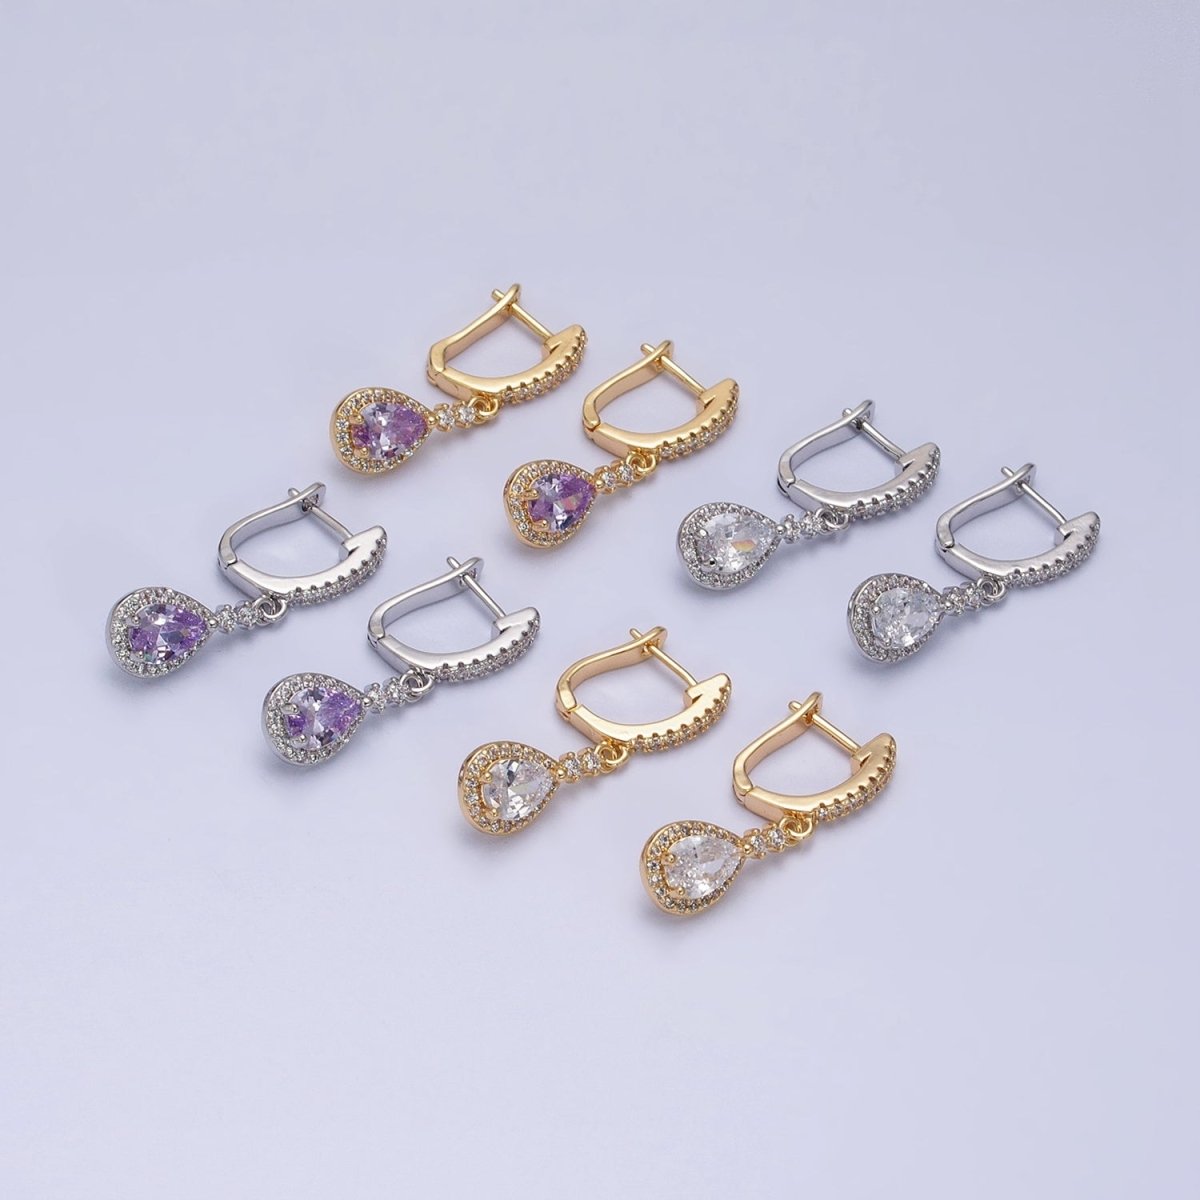 Gold, Silver Clear, Purple Teardrop CZ Micro Paved English Lock Drop Earrings | AD917 - AD920 no - DLUXCA